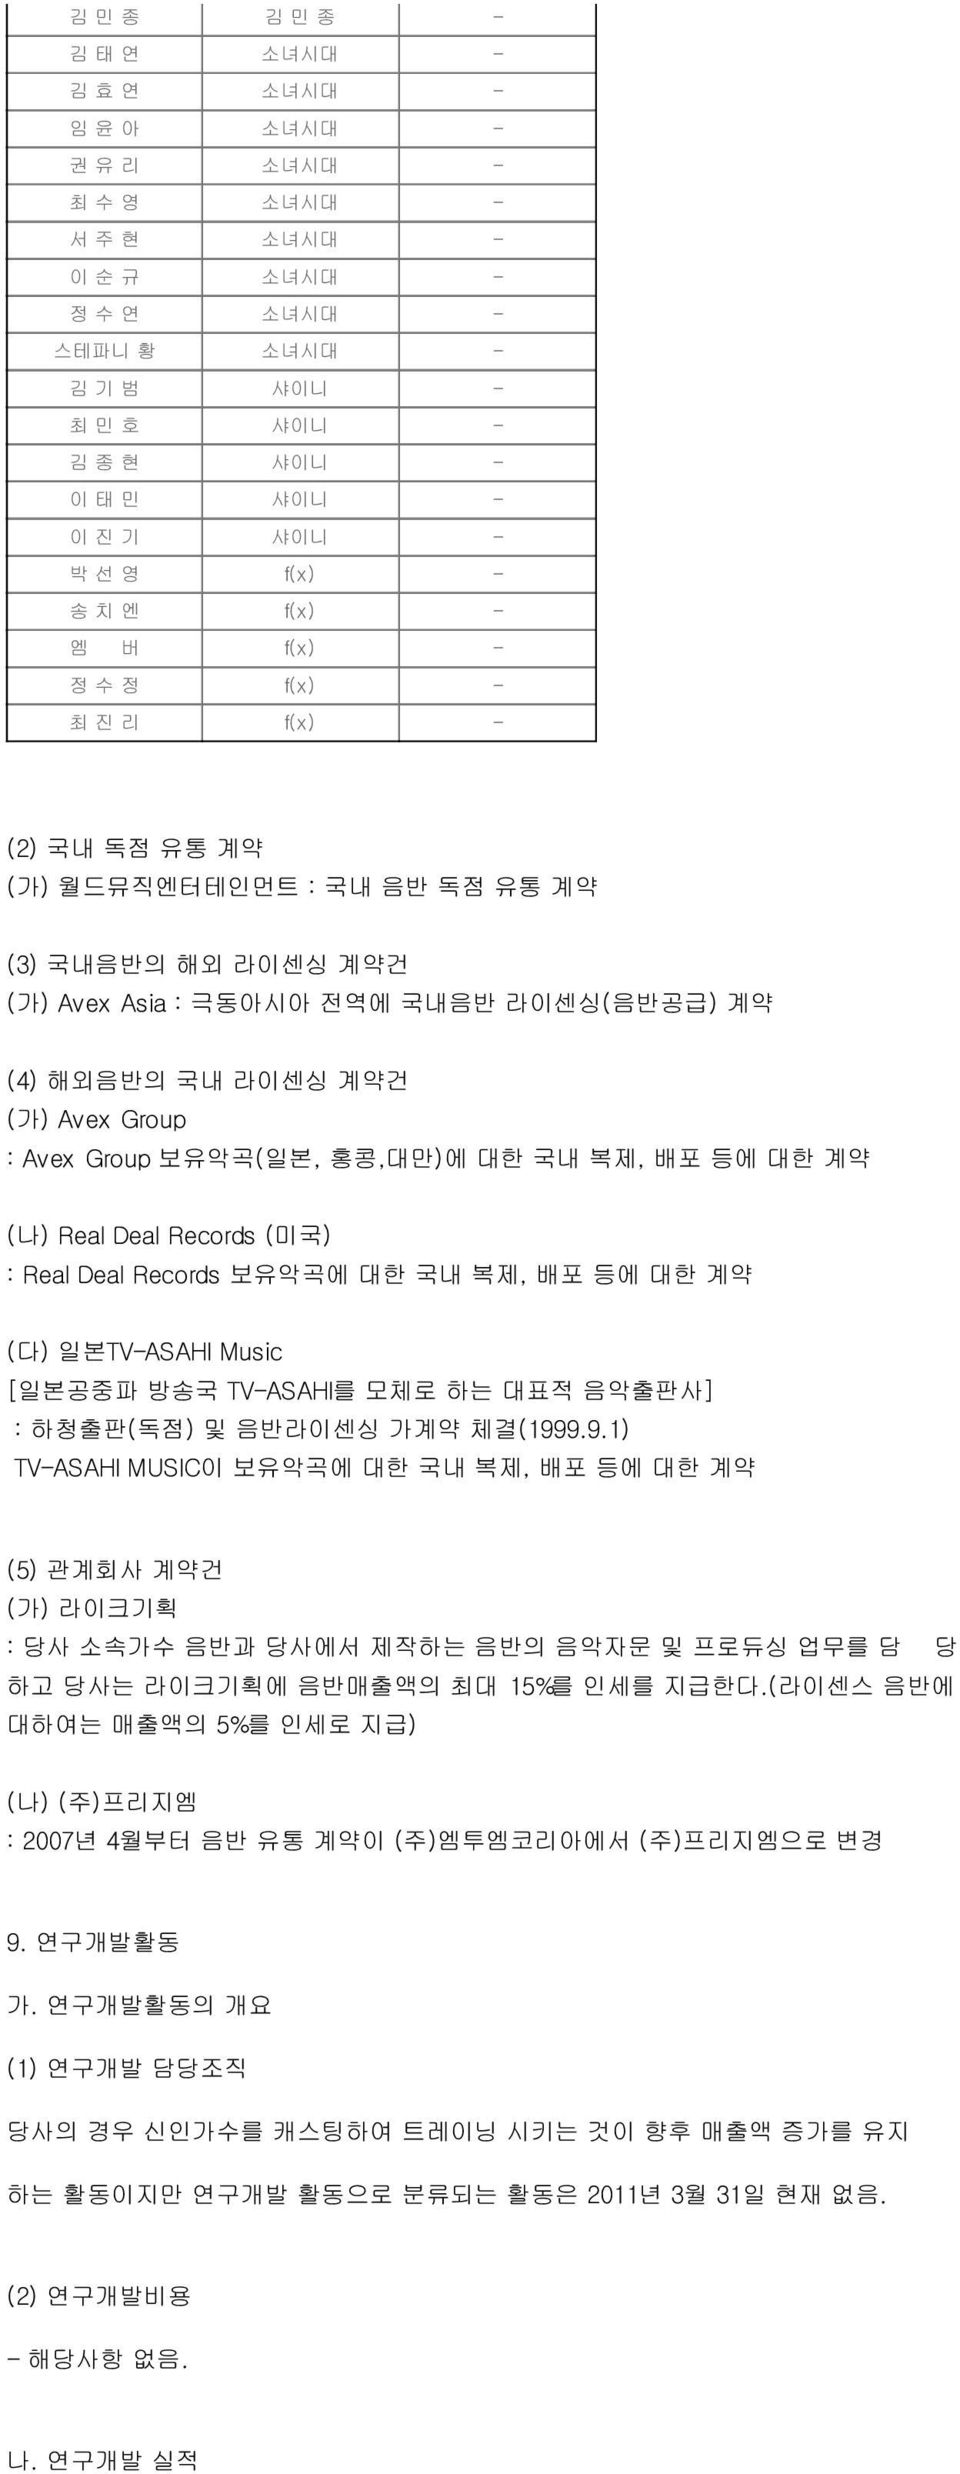 Avex Group : Avex Group 보유악곡(일본, 홍콩,대만)에 대한 국내 복제, 배포 등에 대한 계약 (나) Real Deal Records (미국) : Real Deal Records 보유악곡에 대한 국내 복제, 배포 등에 대한 계약 (다) 일본TV-ASAHI Music [일본공중파 방송국 TV-ASAHI를 모체로 하는 대표적 음악출판사] :